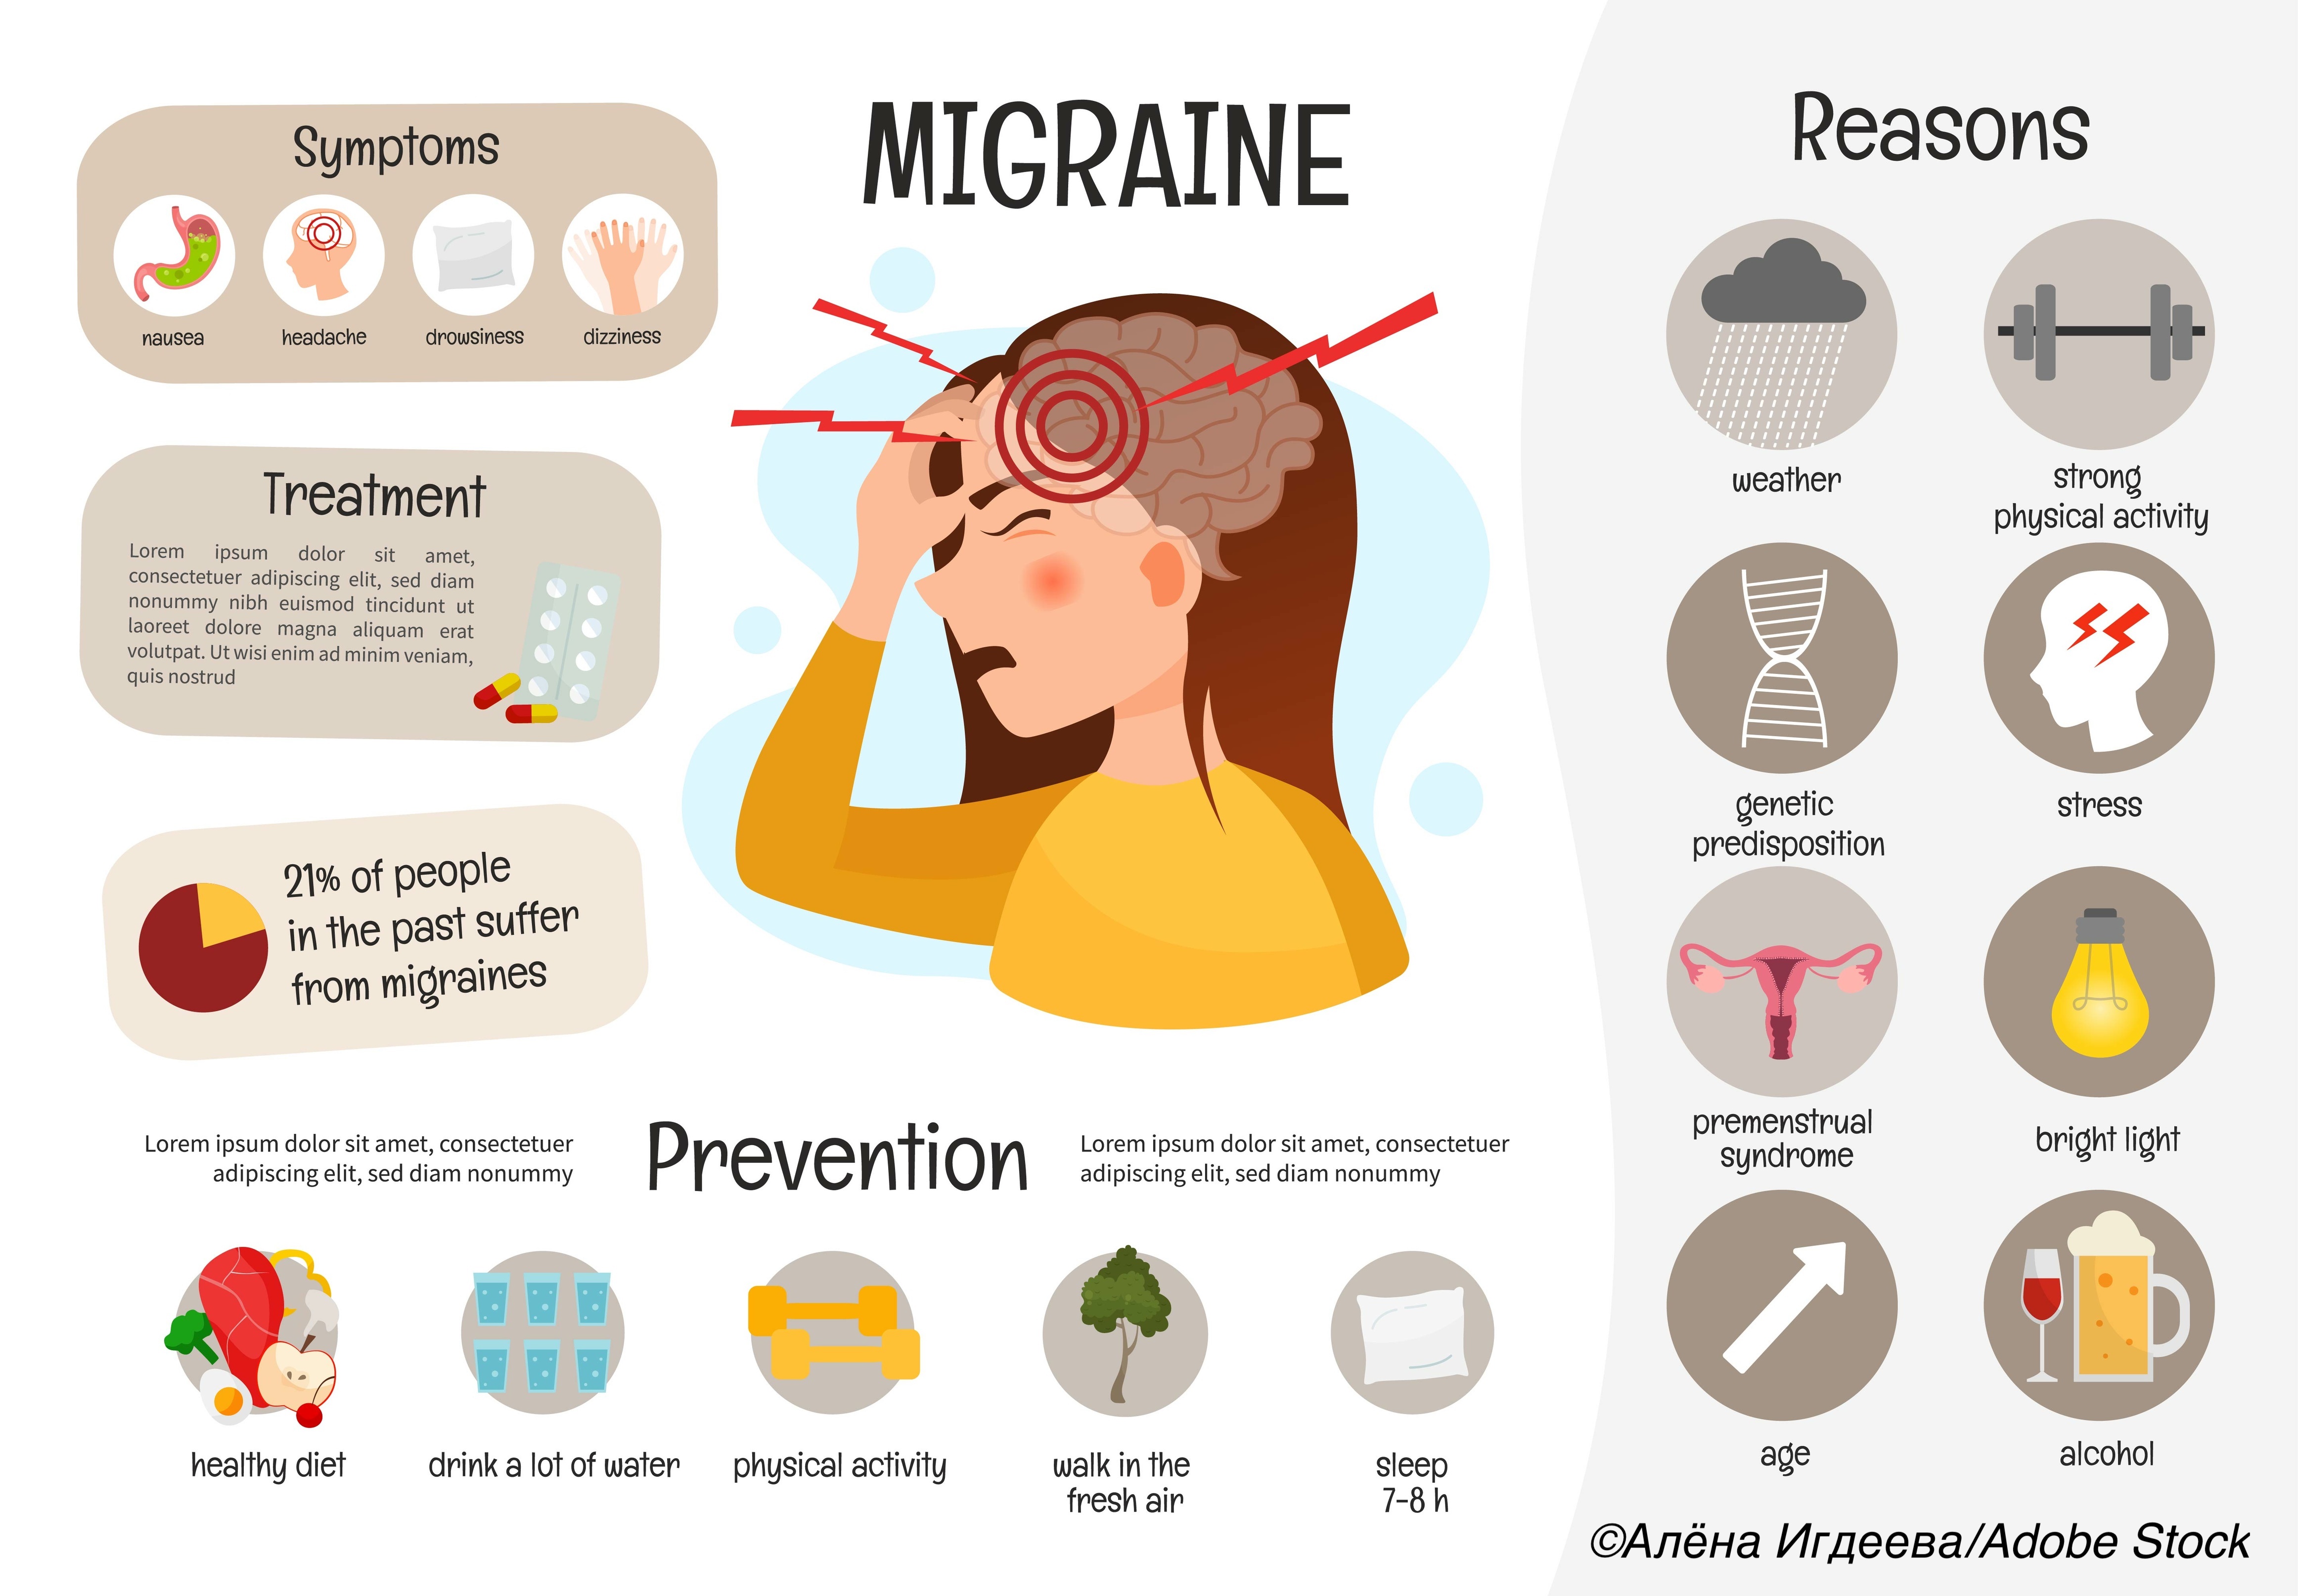 Omega-3 Diet Reduces Migraine Headaches